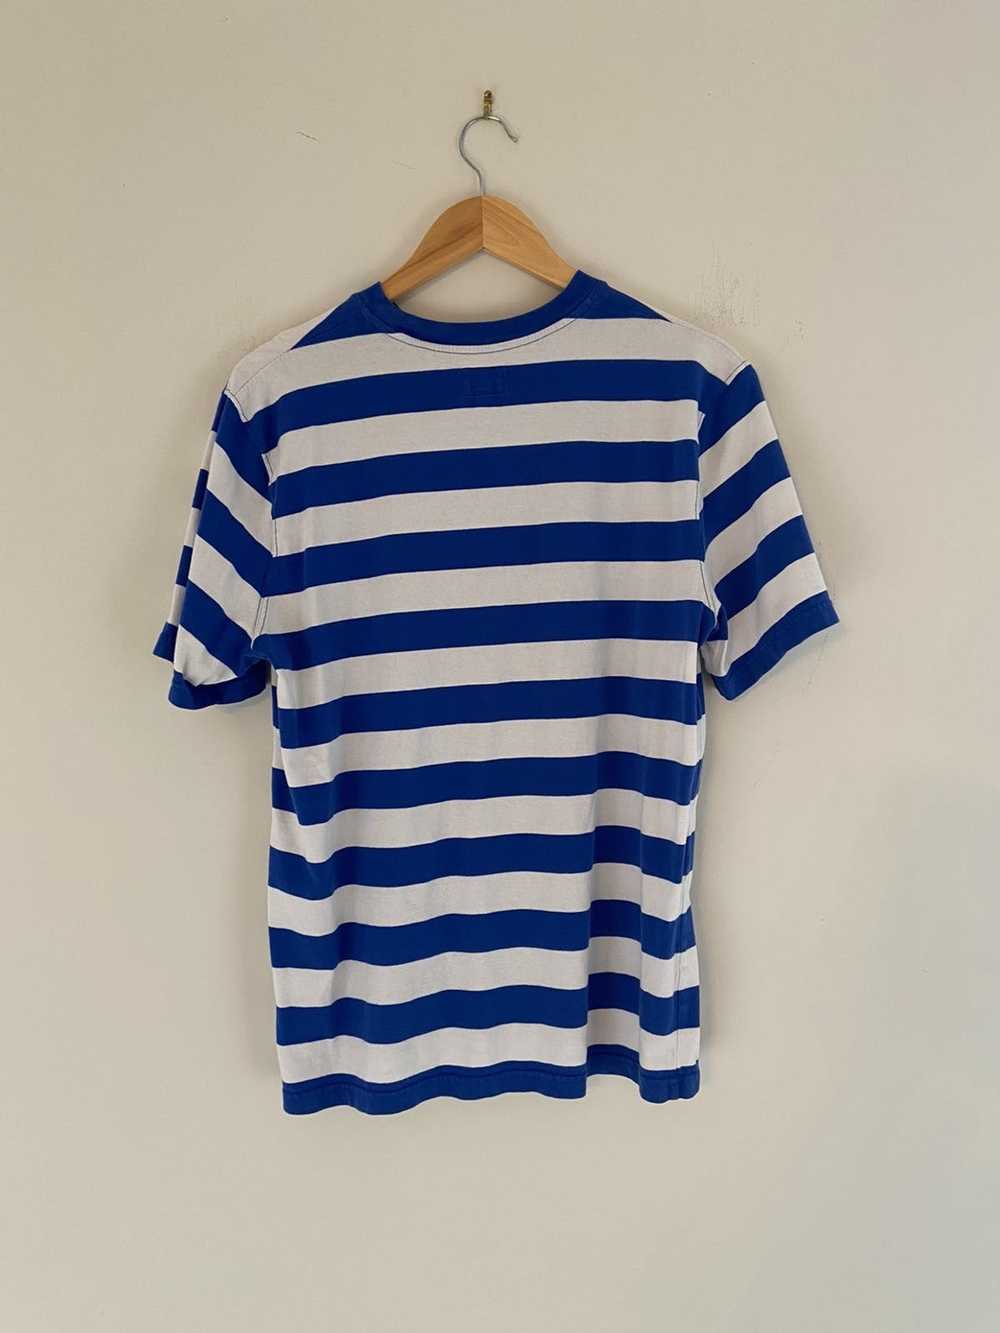 Noah Noah striped pocket T-shirt - image 2